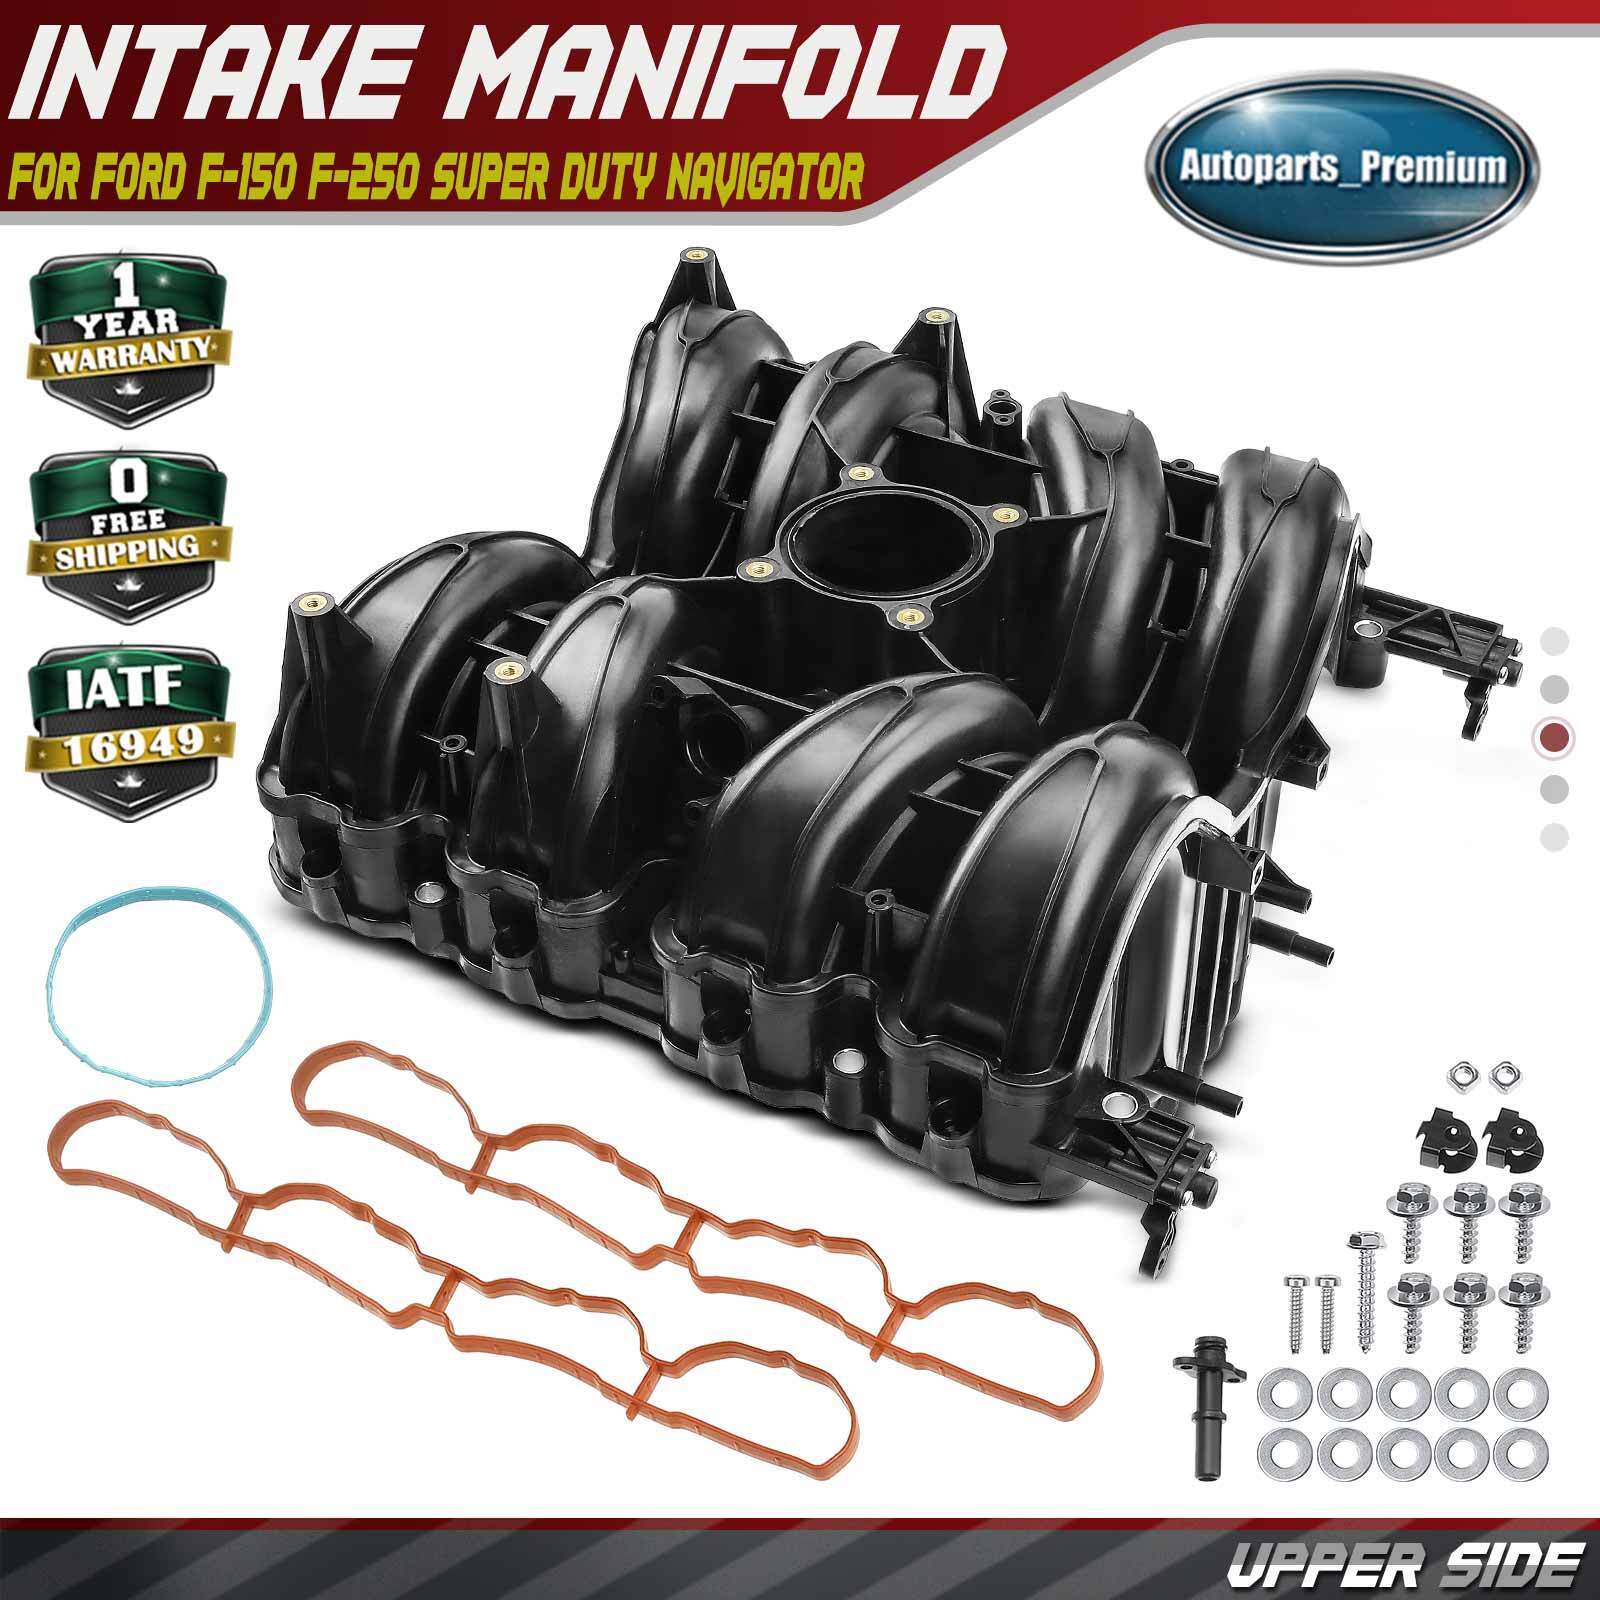 Upper Intake Manifold w/Gasket for Ford F-150 F-250 Super Duty Navigator 5.4L